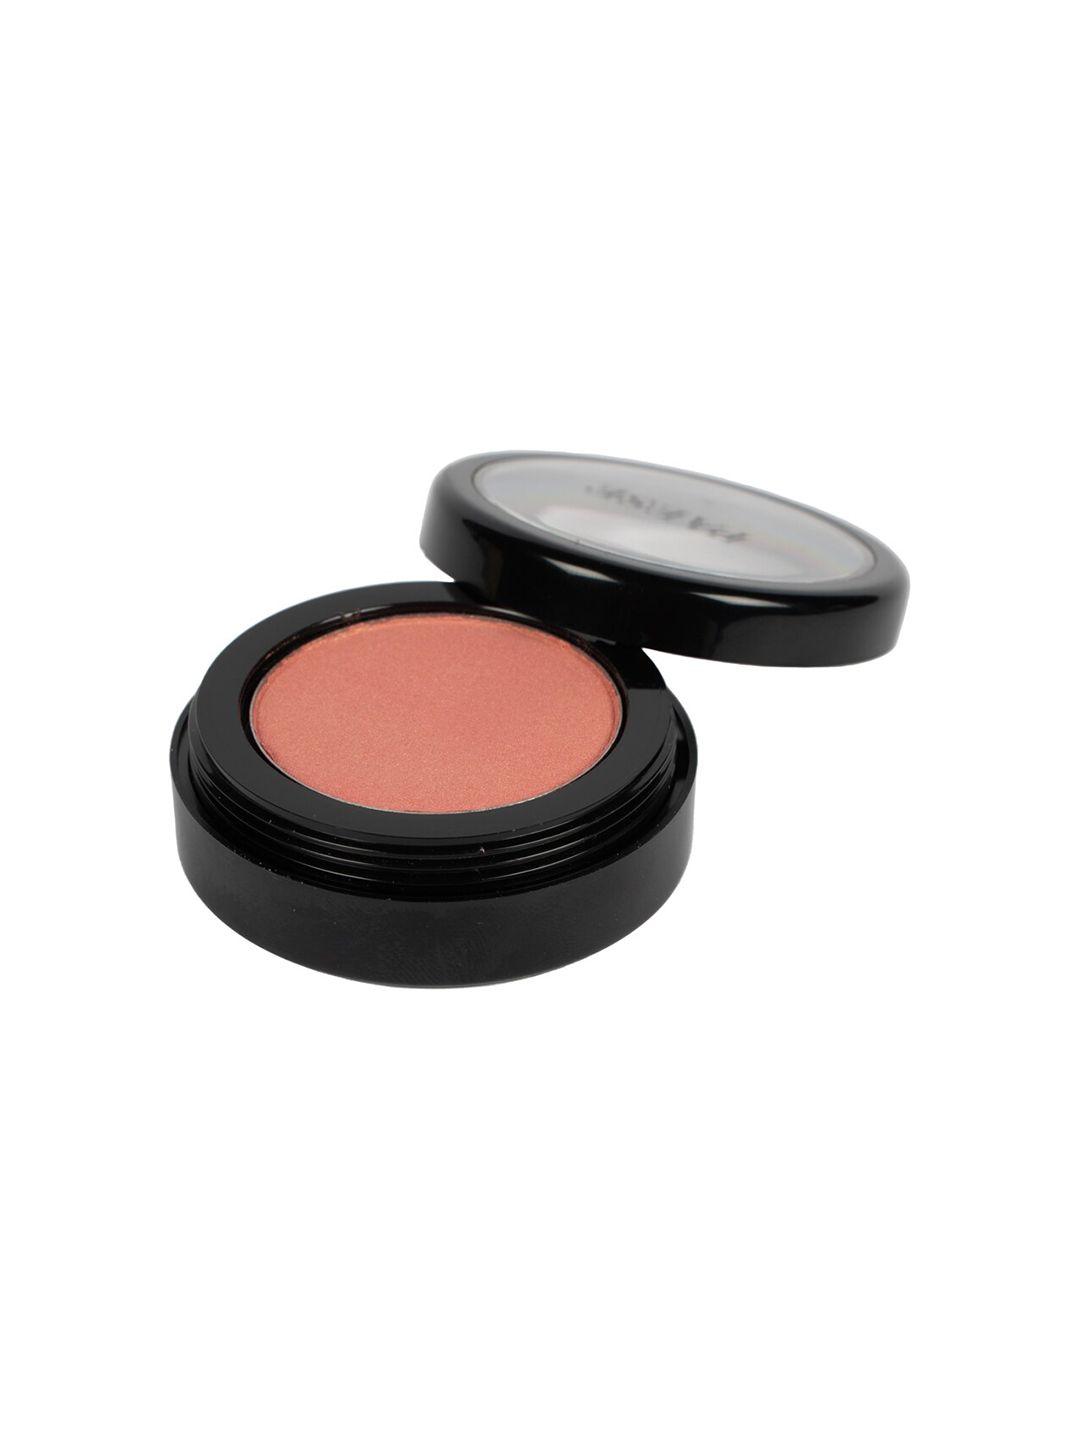 paese cosmetics illuminating/matte blush with argan oil 3g - pearl 65